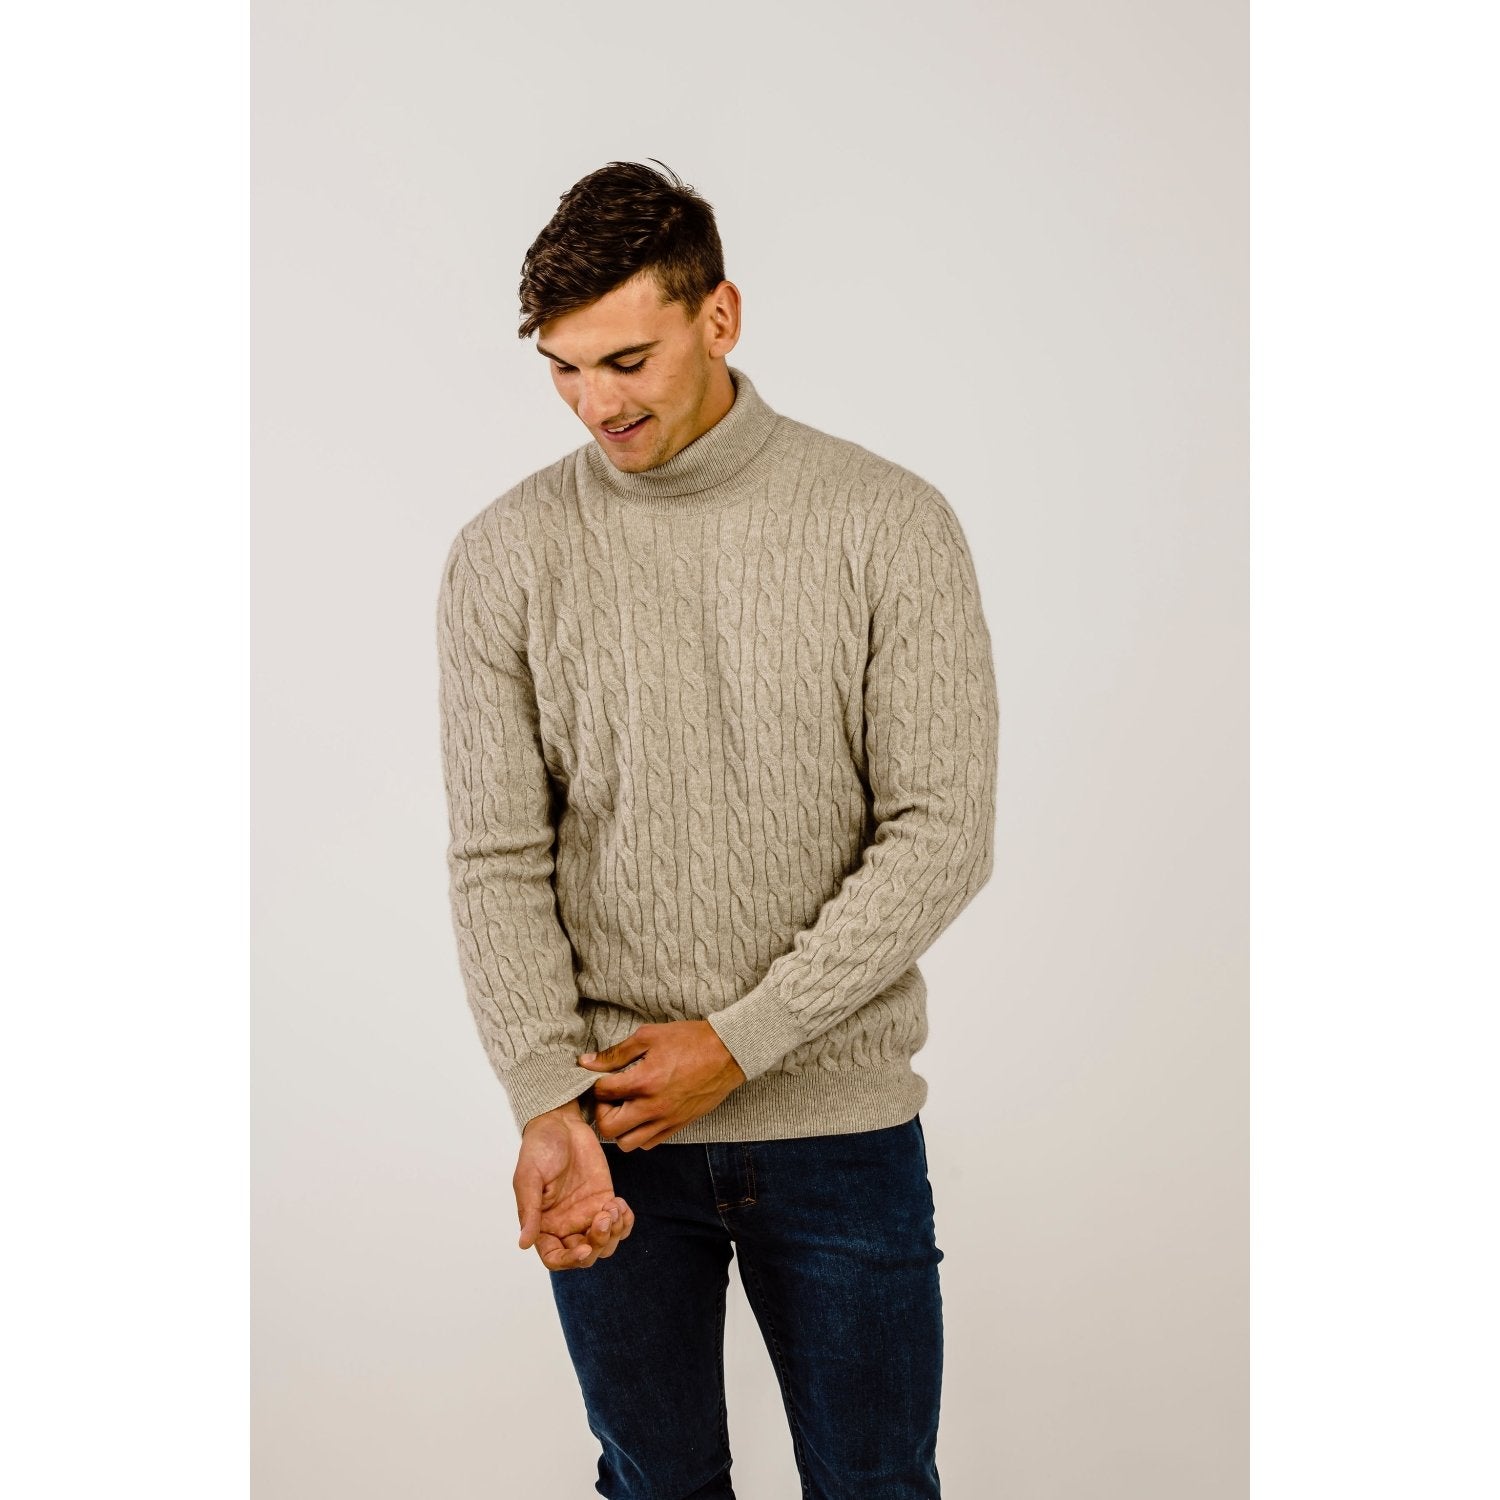 Cable turtleneck sweater - Kapeka NZ